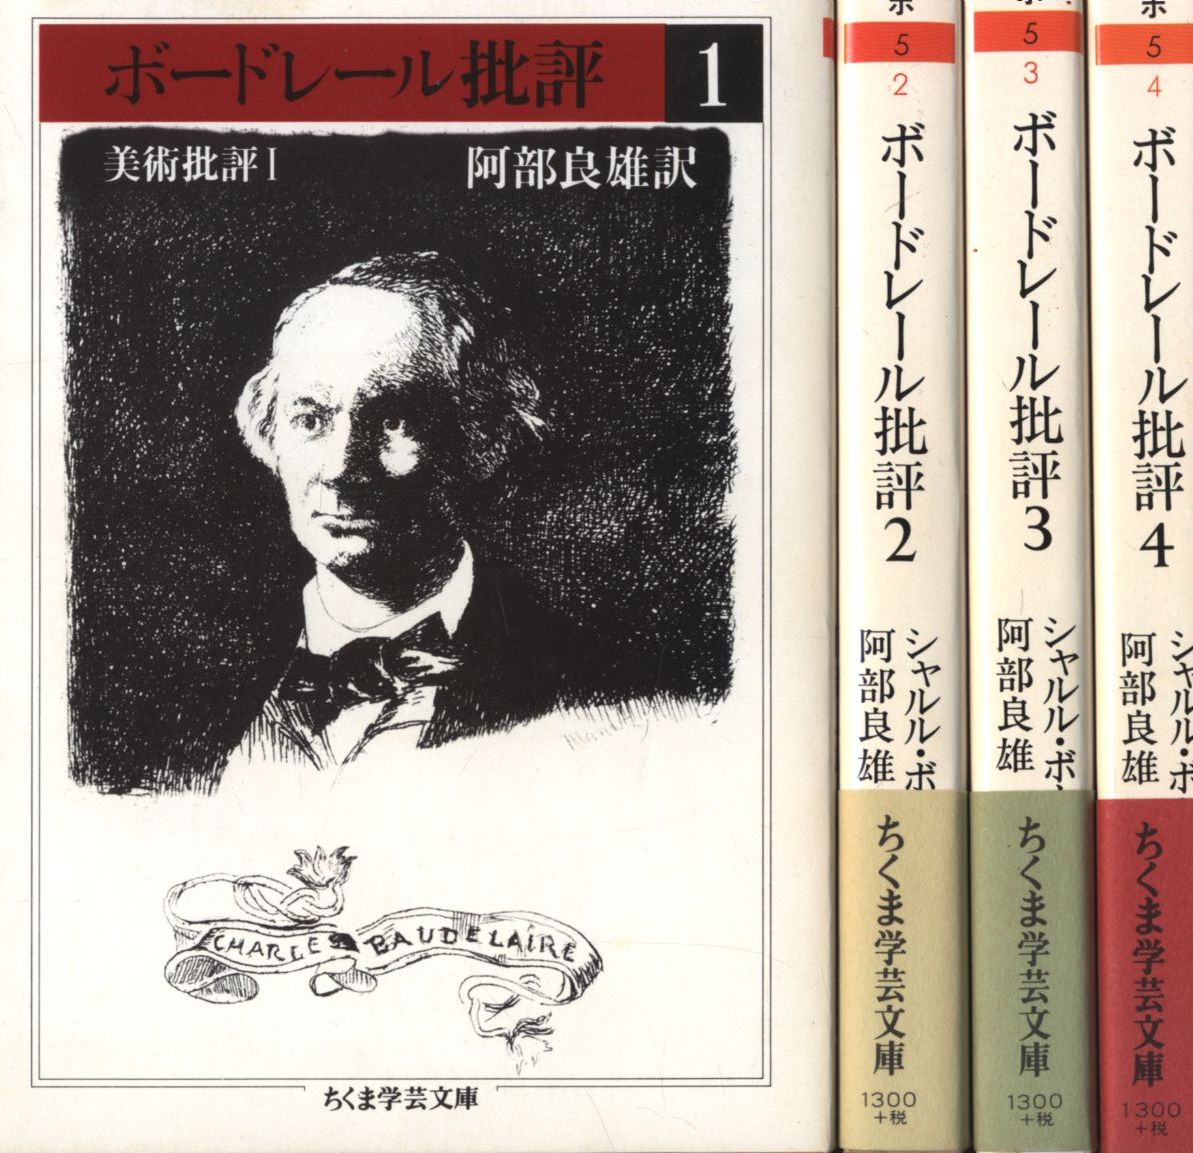 Charles Board Rail Abe Yoshio Translation Baudelaire Critics All Four Volumes Assortment Mandarake Online Shop